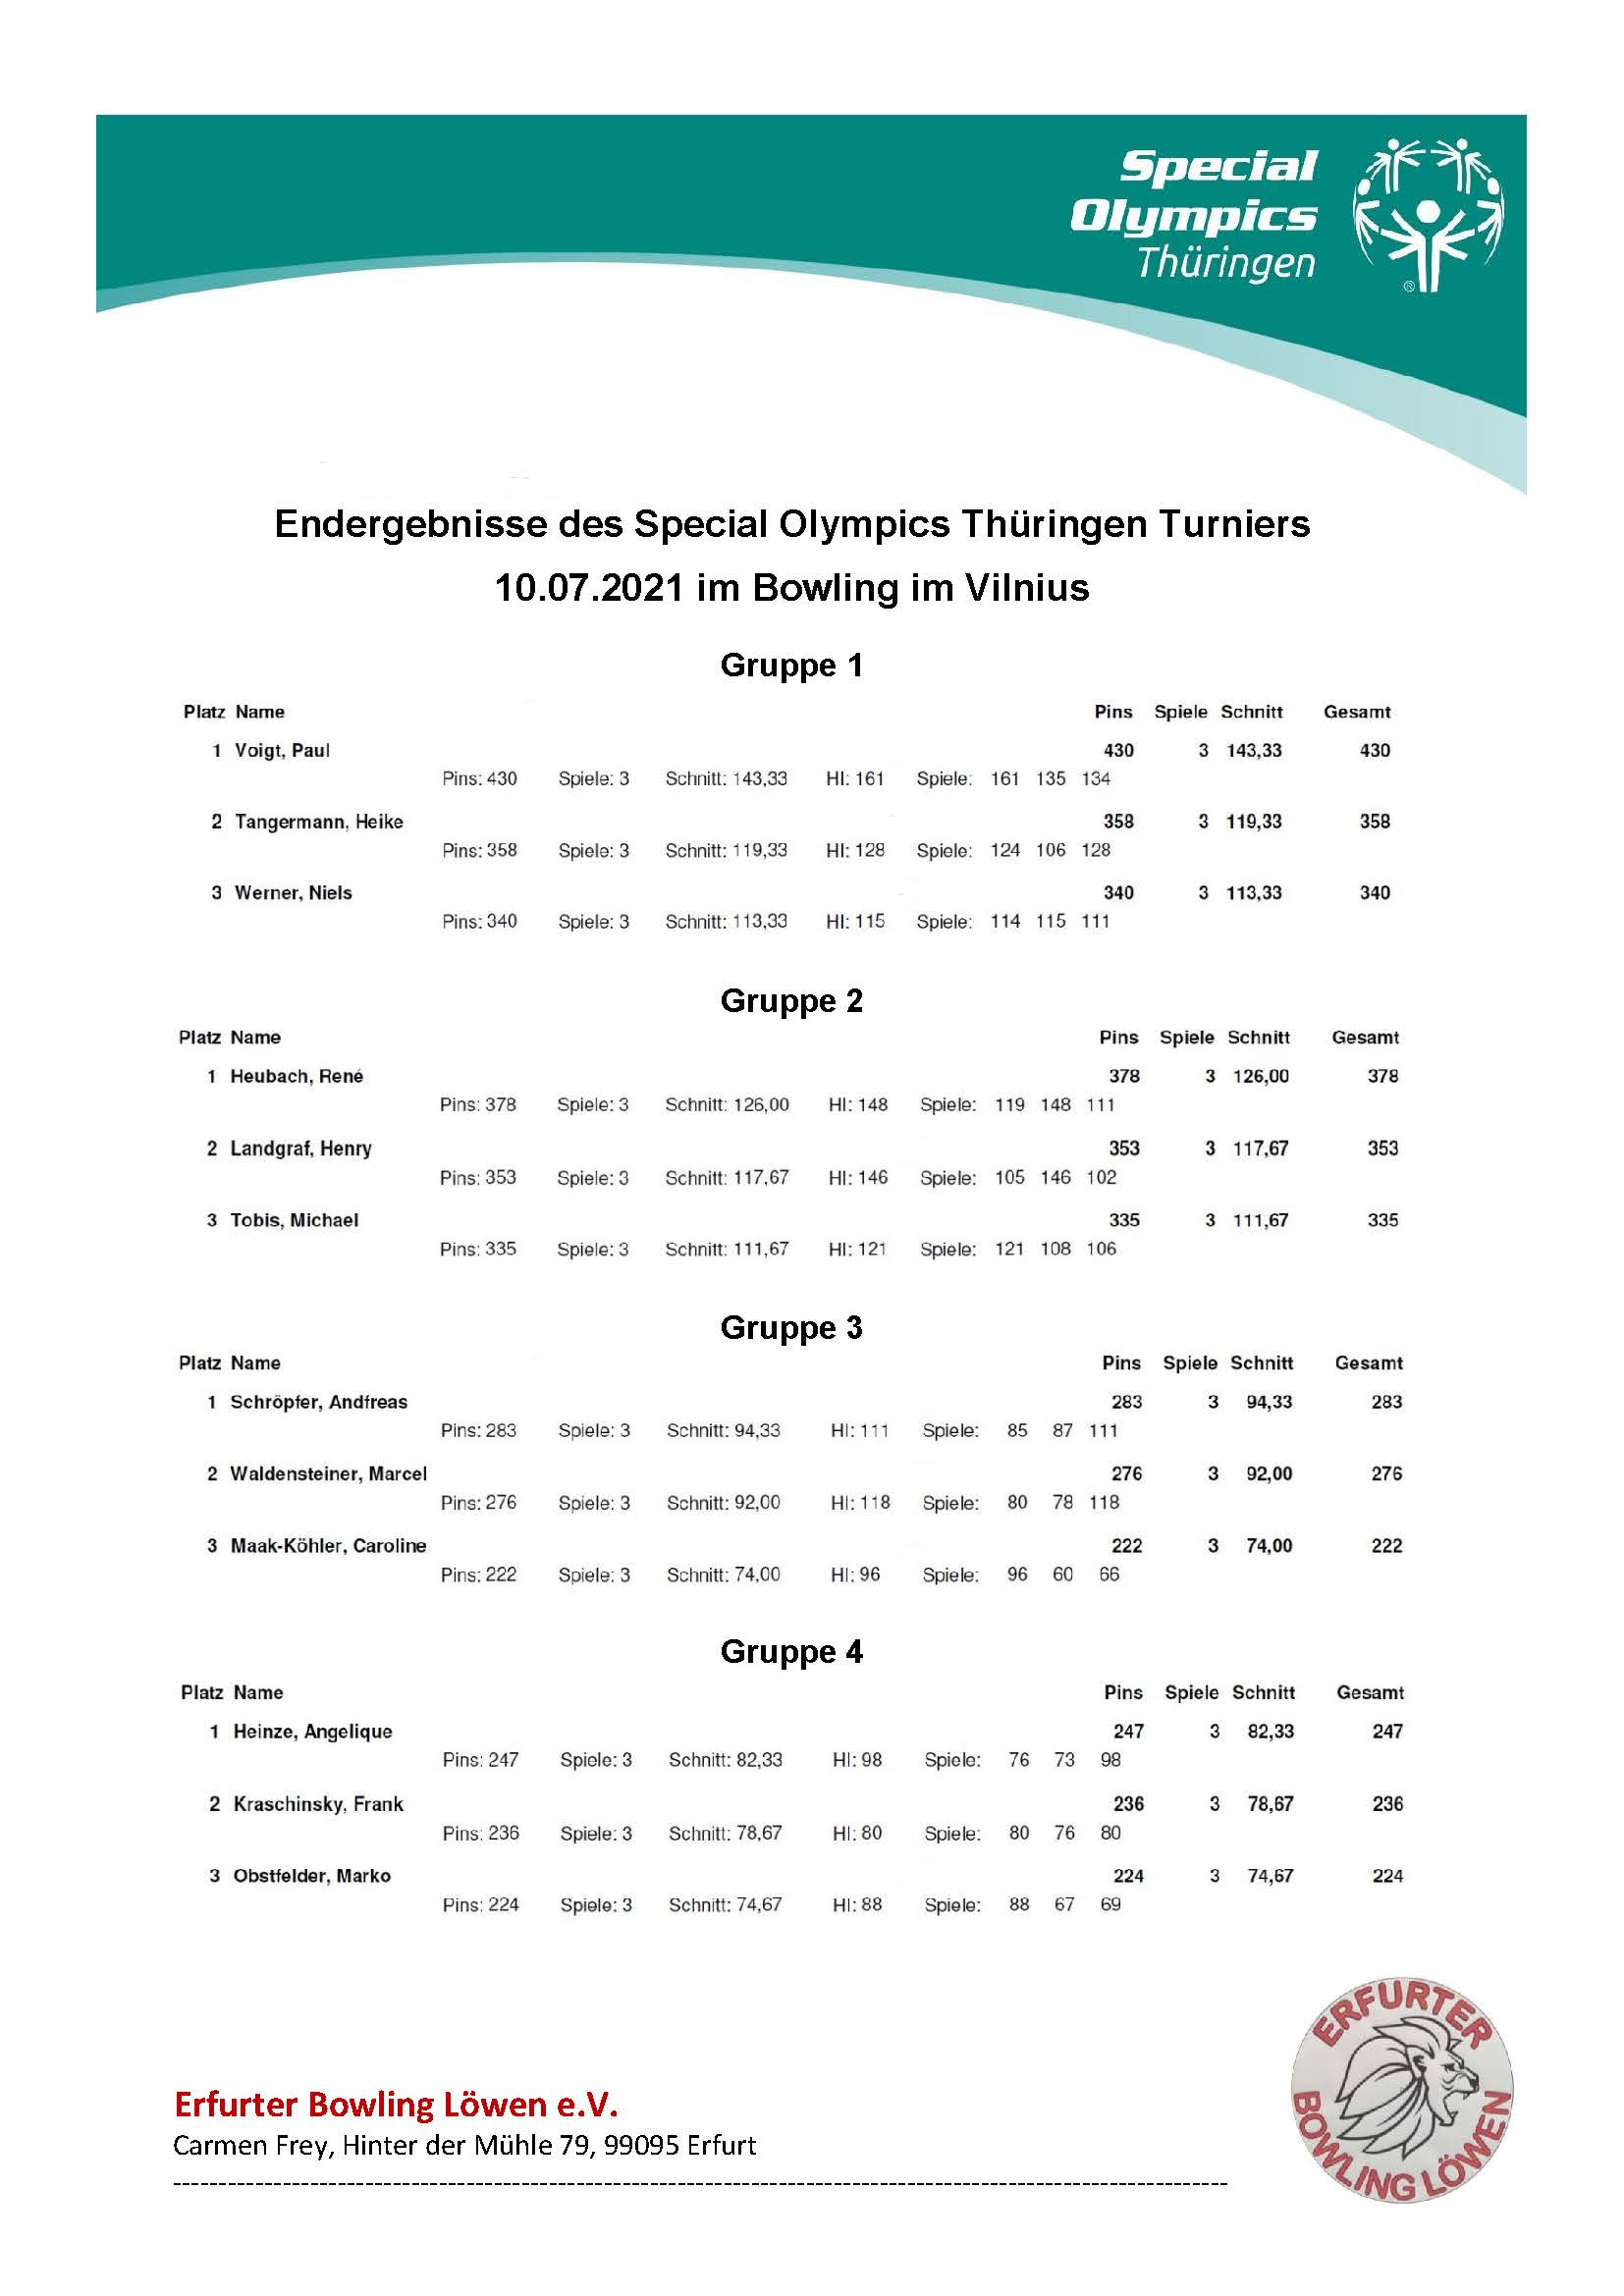 Special Olympics Thüringen Turnier Ergebnisse Erfurter Bowling